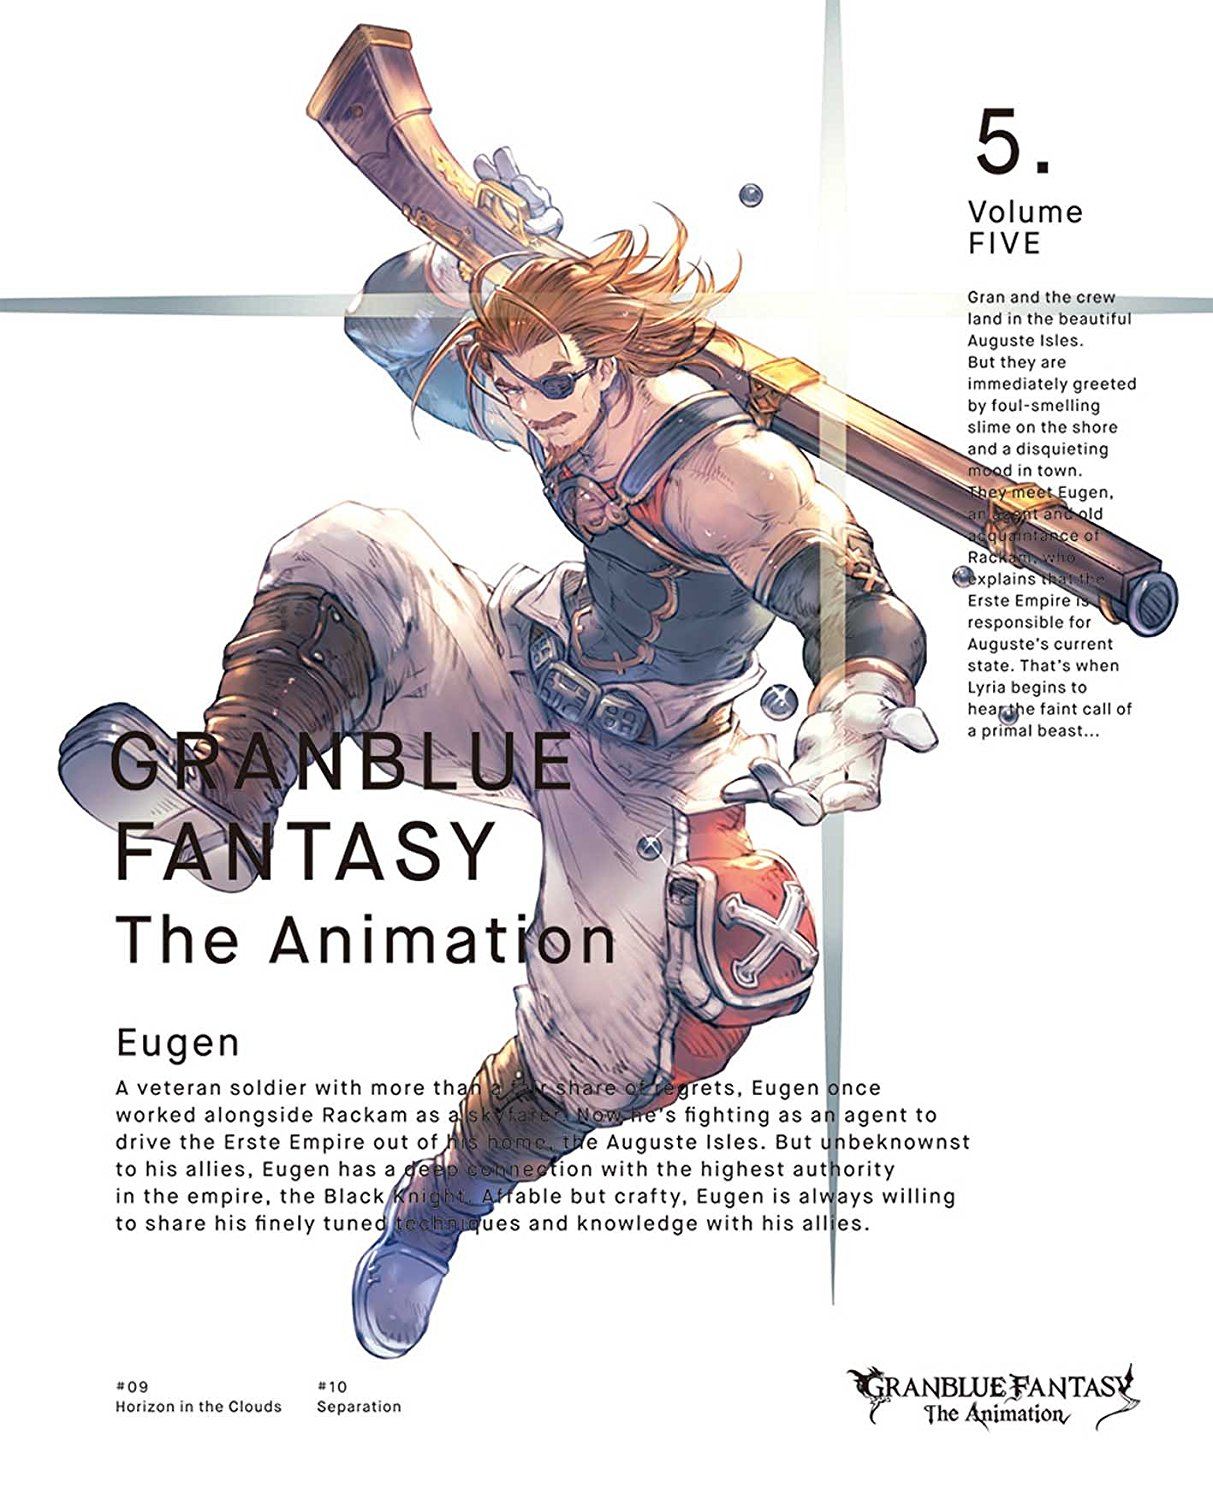 Granblue Fantasy The Animation Season 2 Vol.4 [Limited Edition]